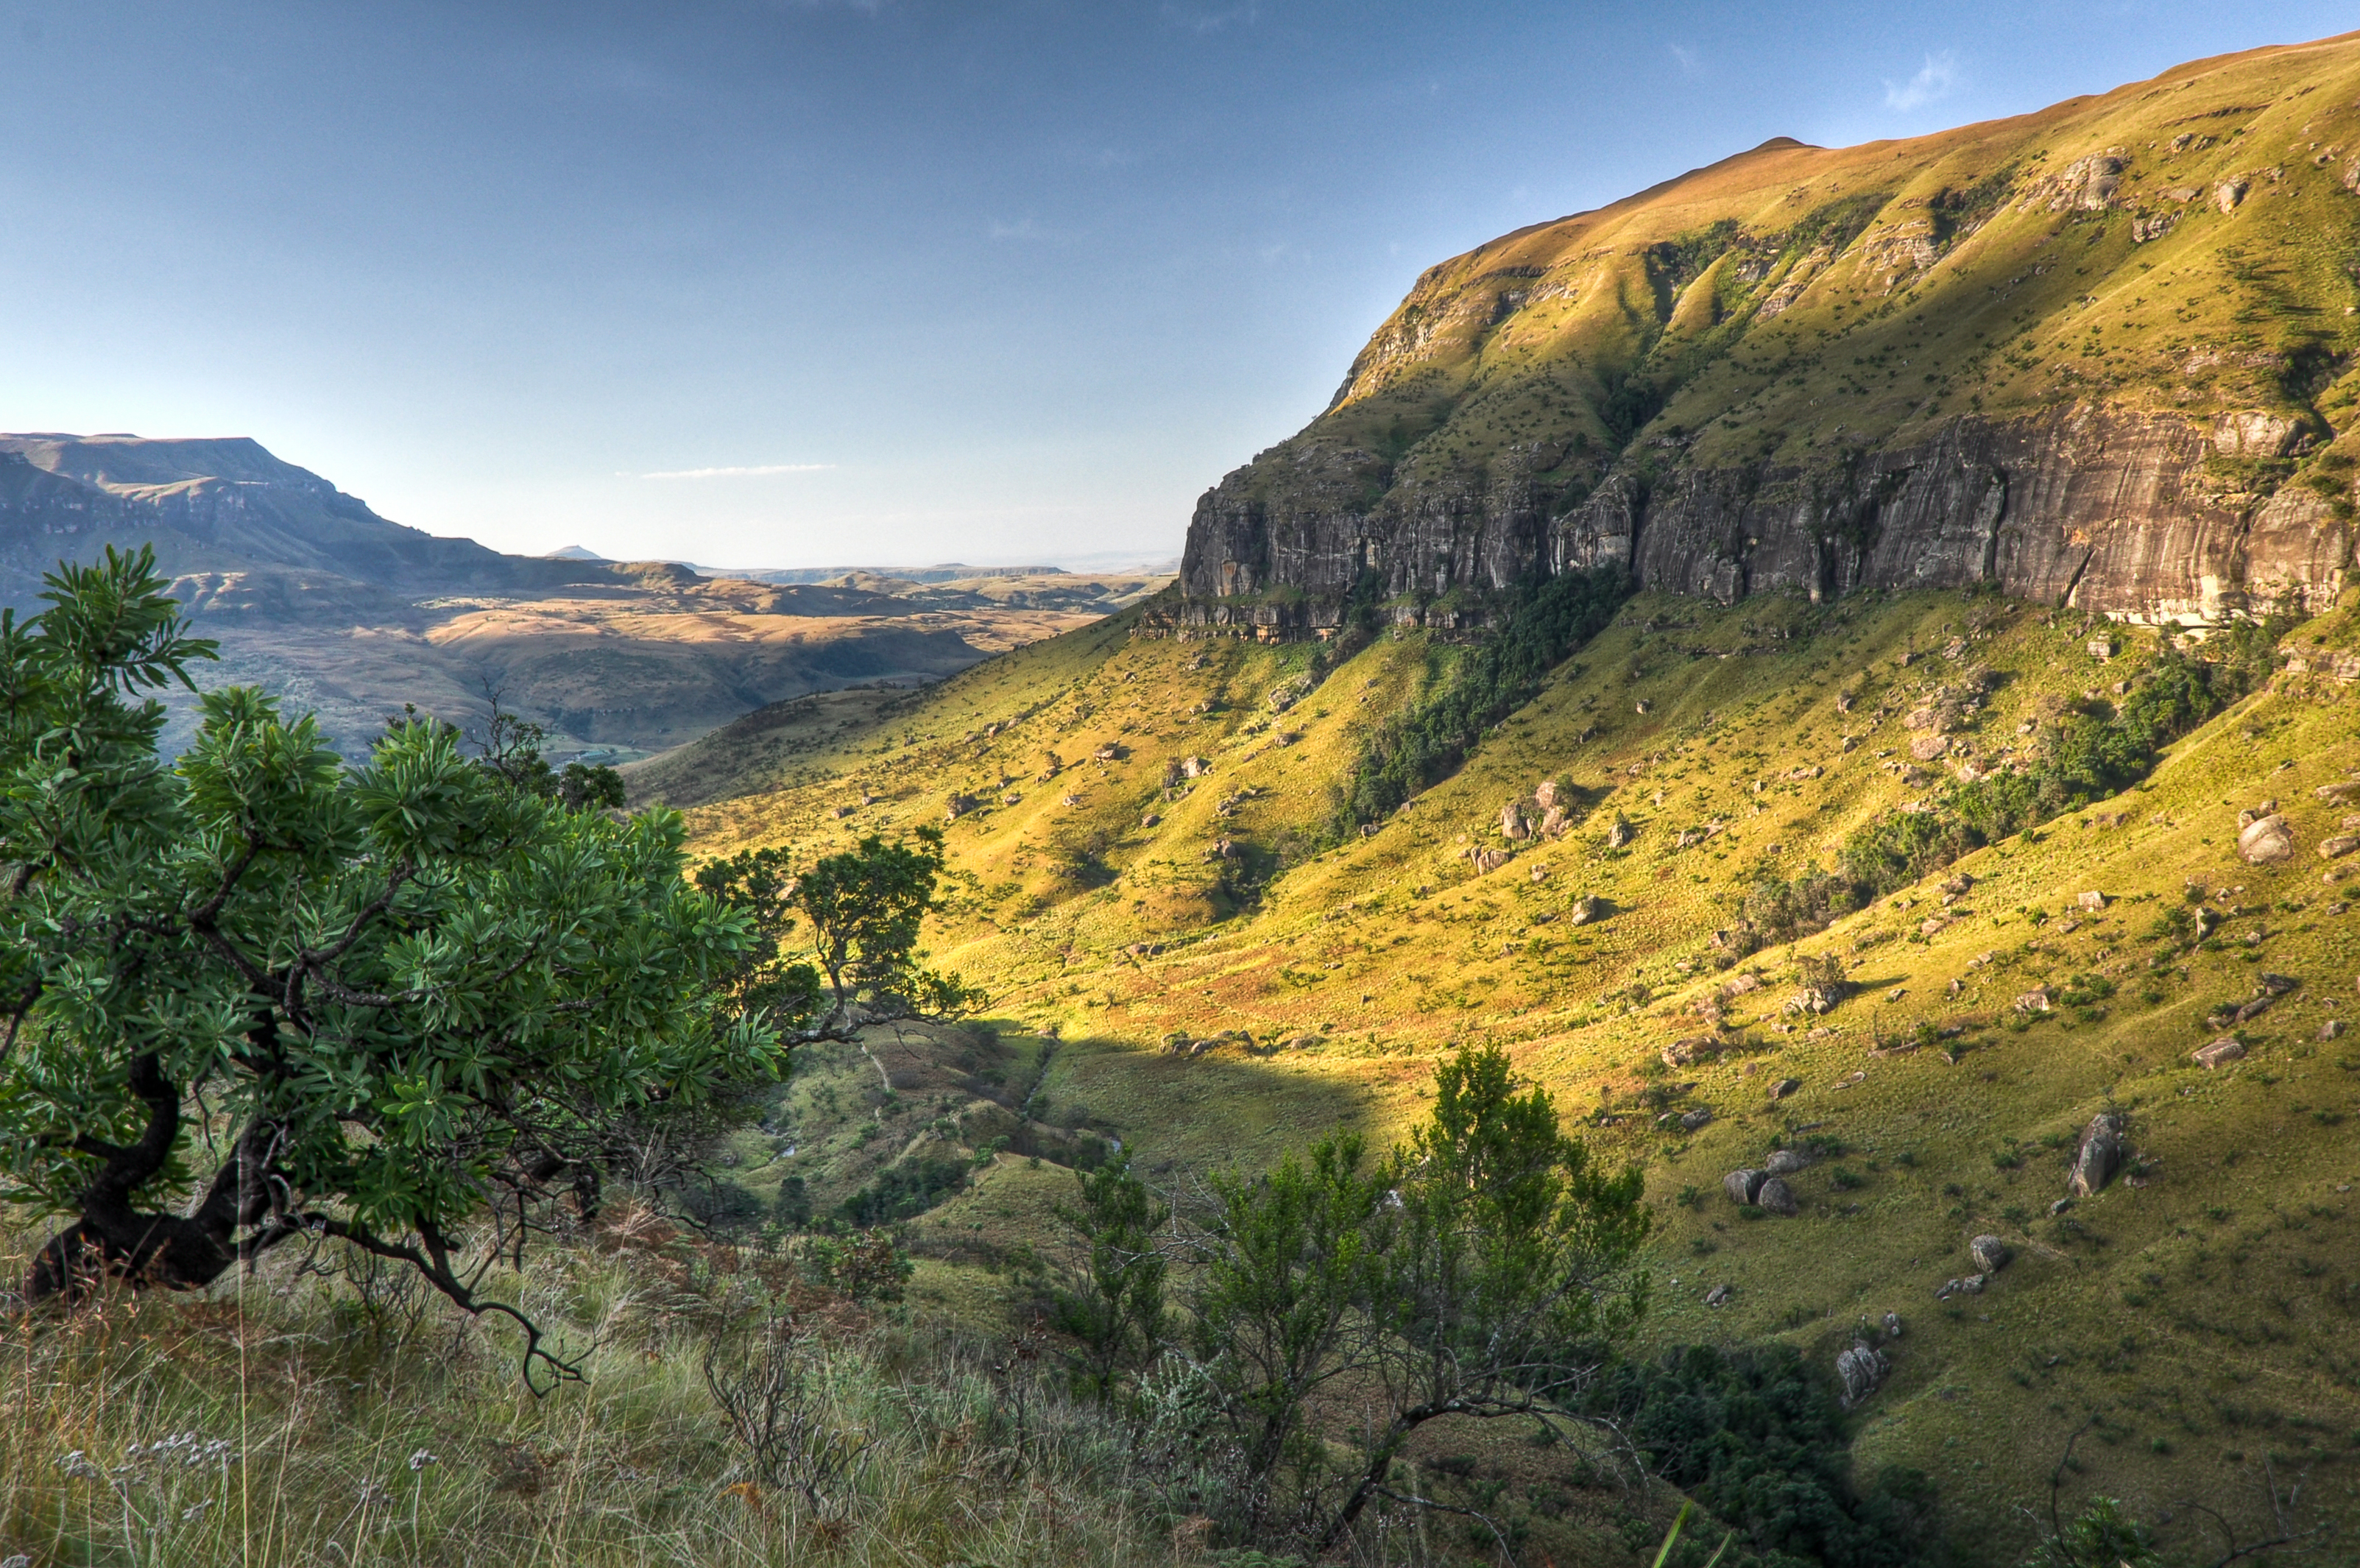 Ukhahlamba Drakensberg Park